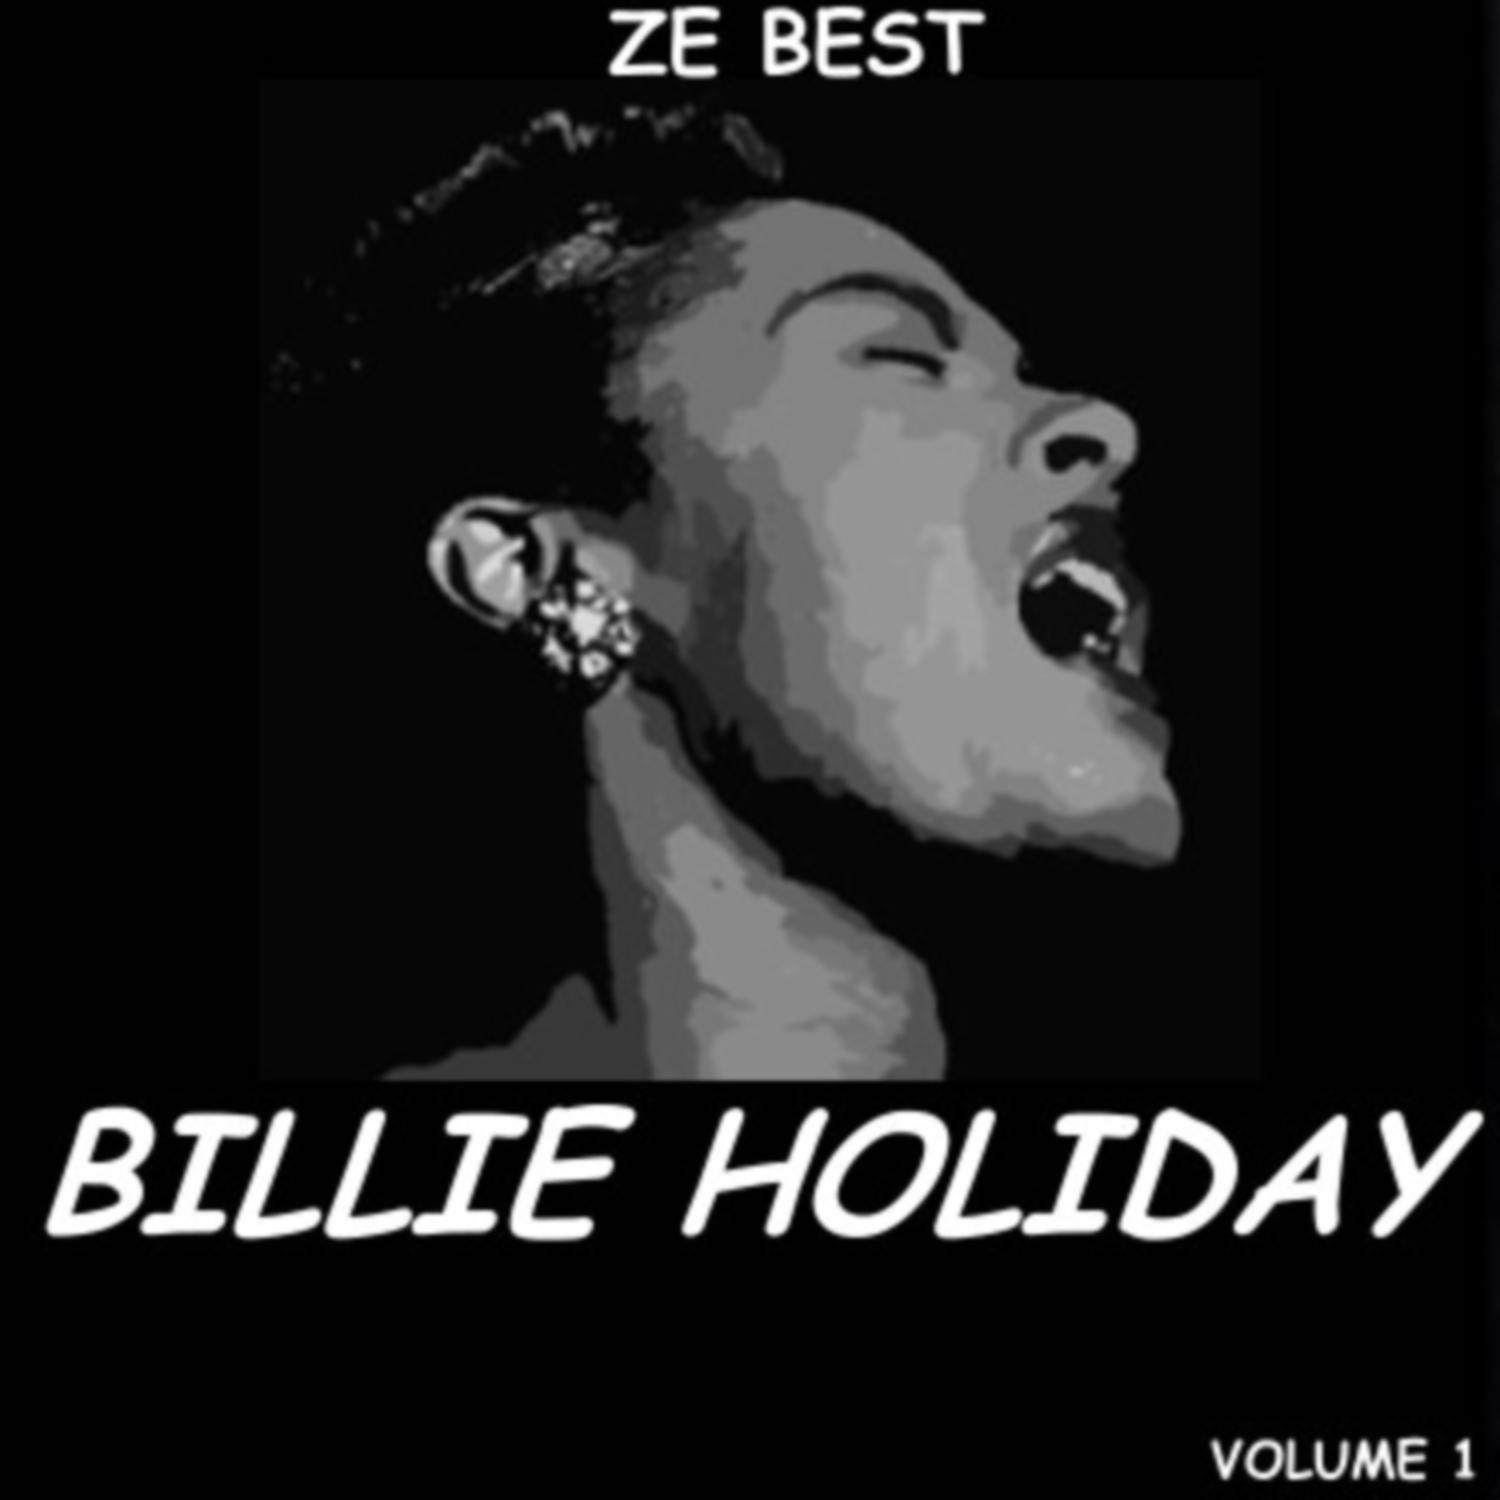 Ze Best - Billie Holiday